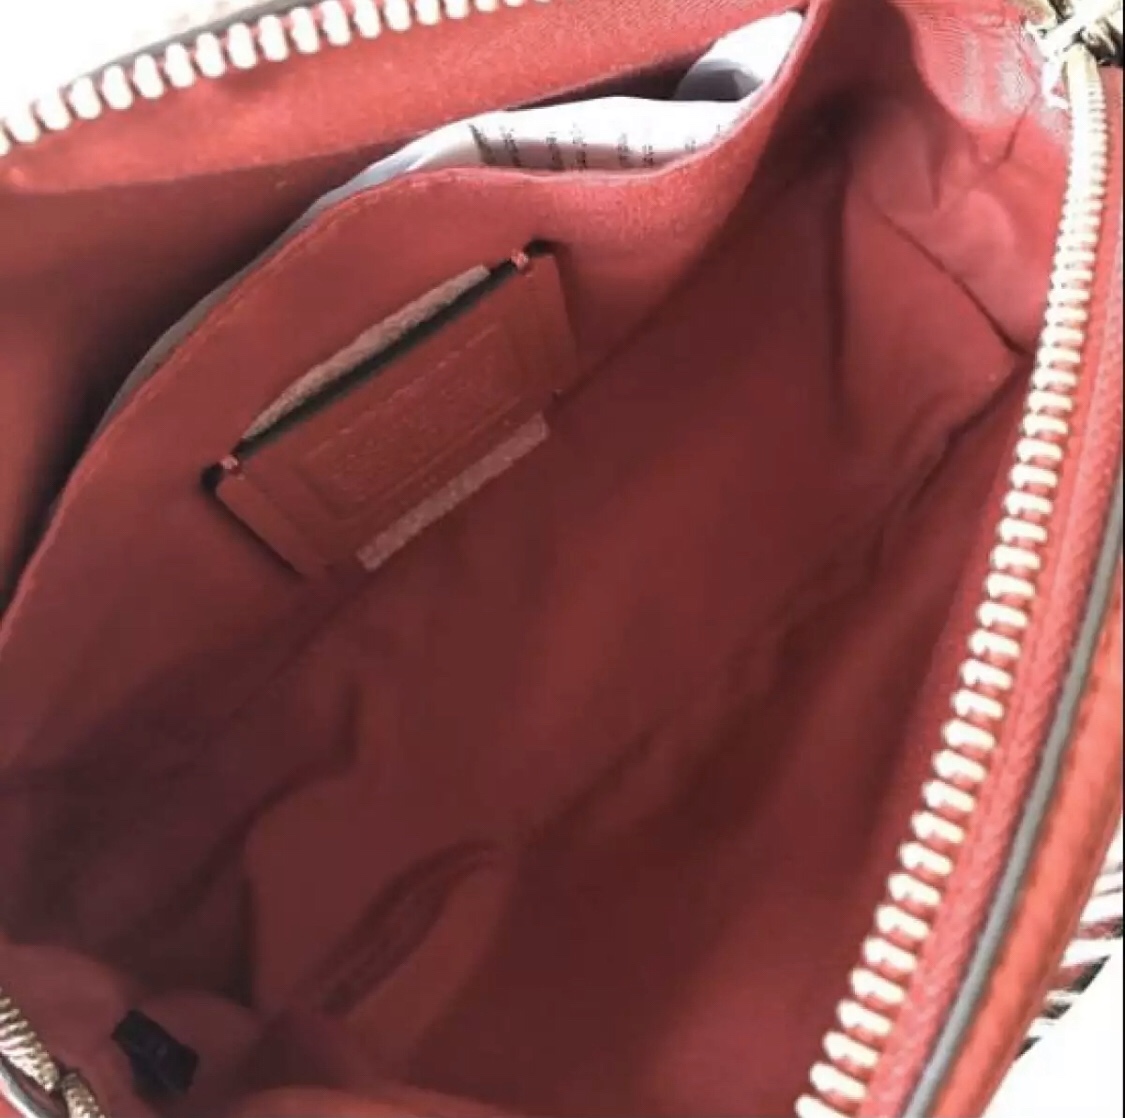 Coach F76673 Zip Bright Cardinal Leather Sling Bag - Black Women's Mini  Dome Crossbody Bag